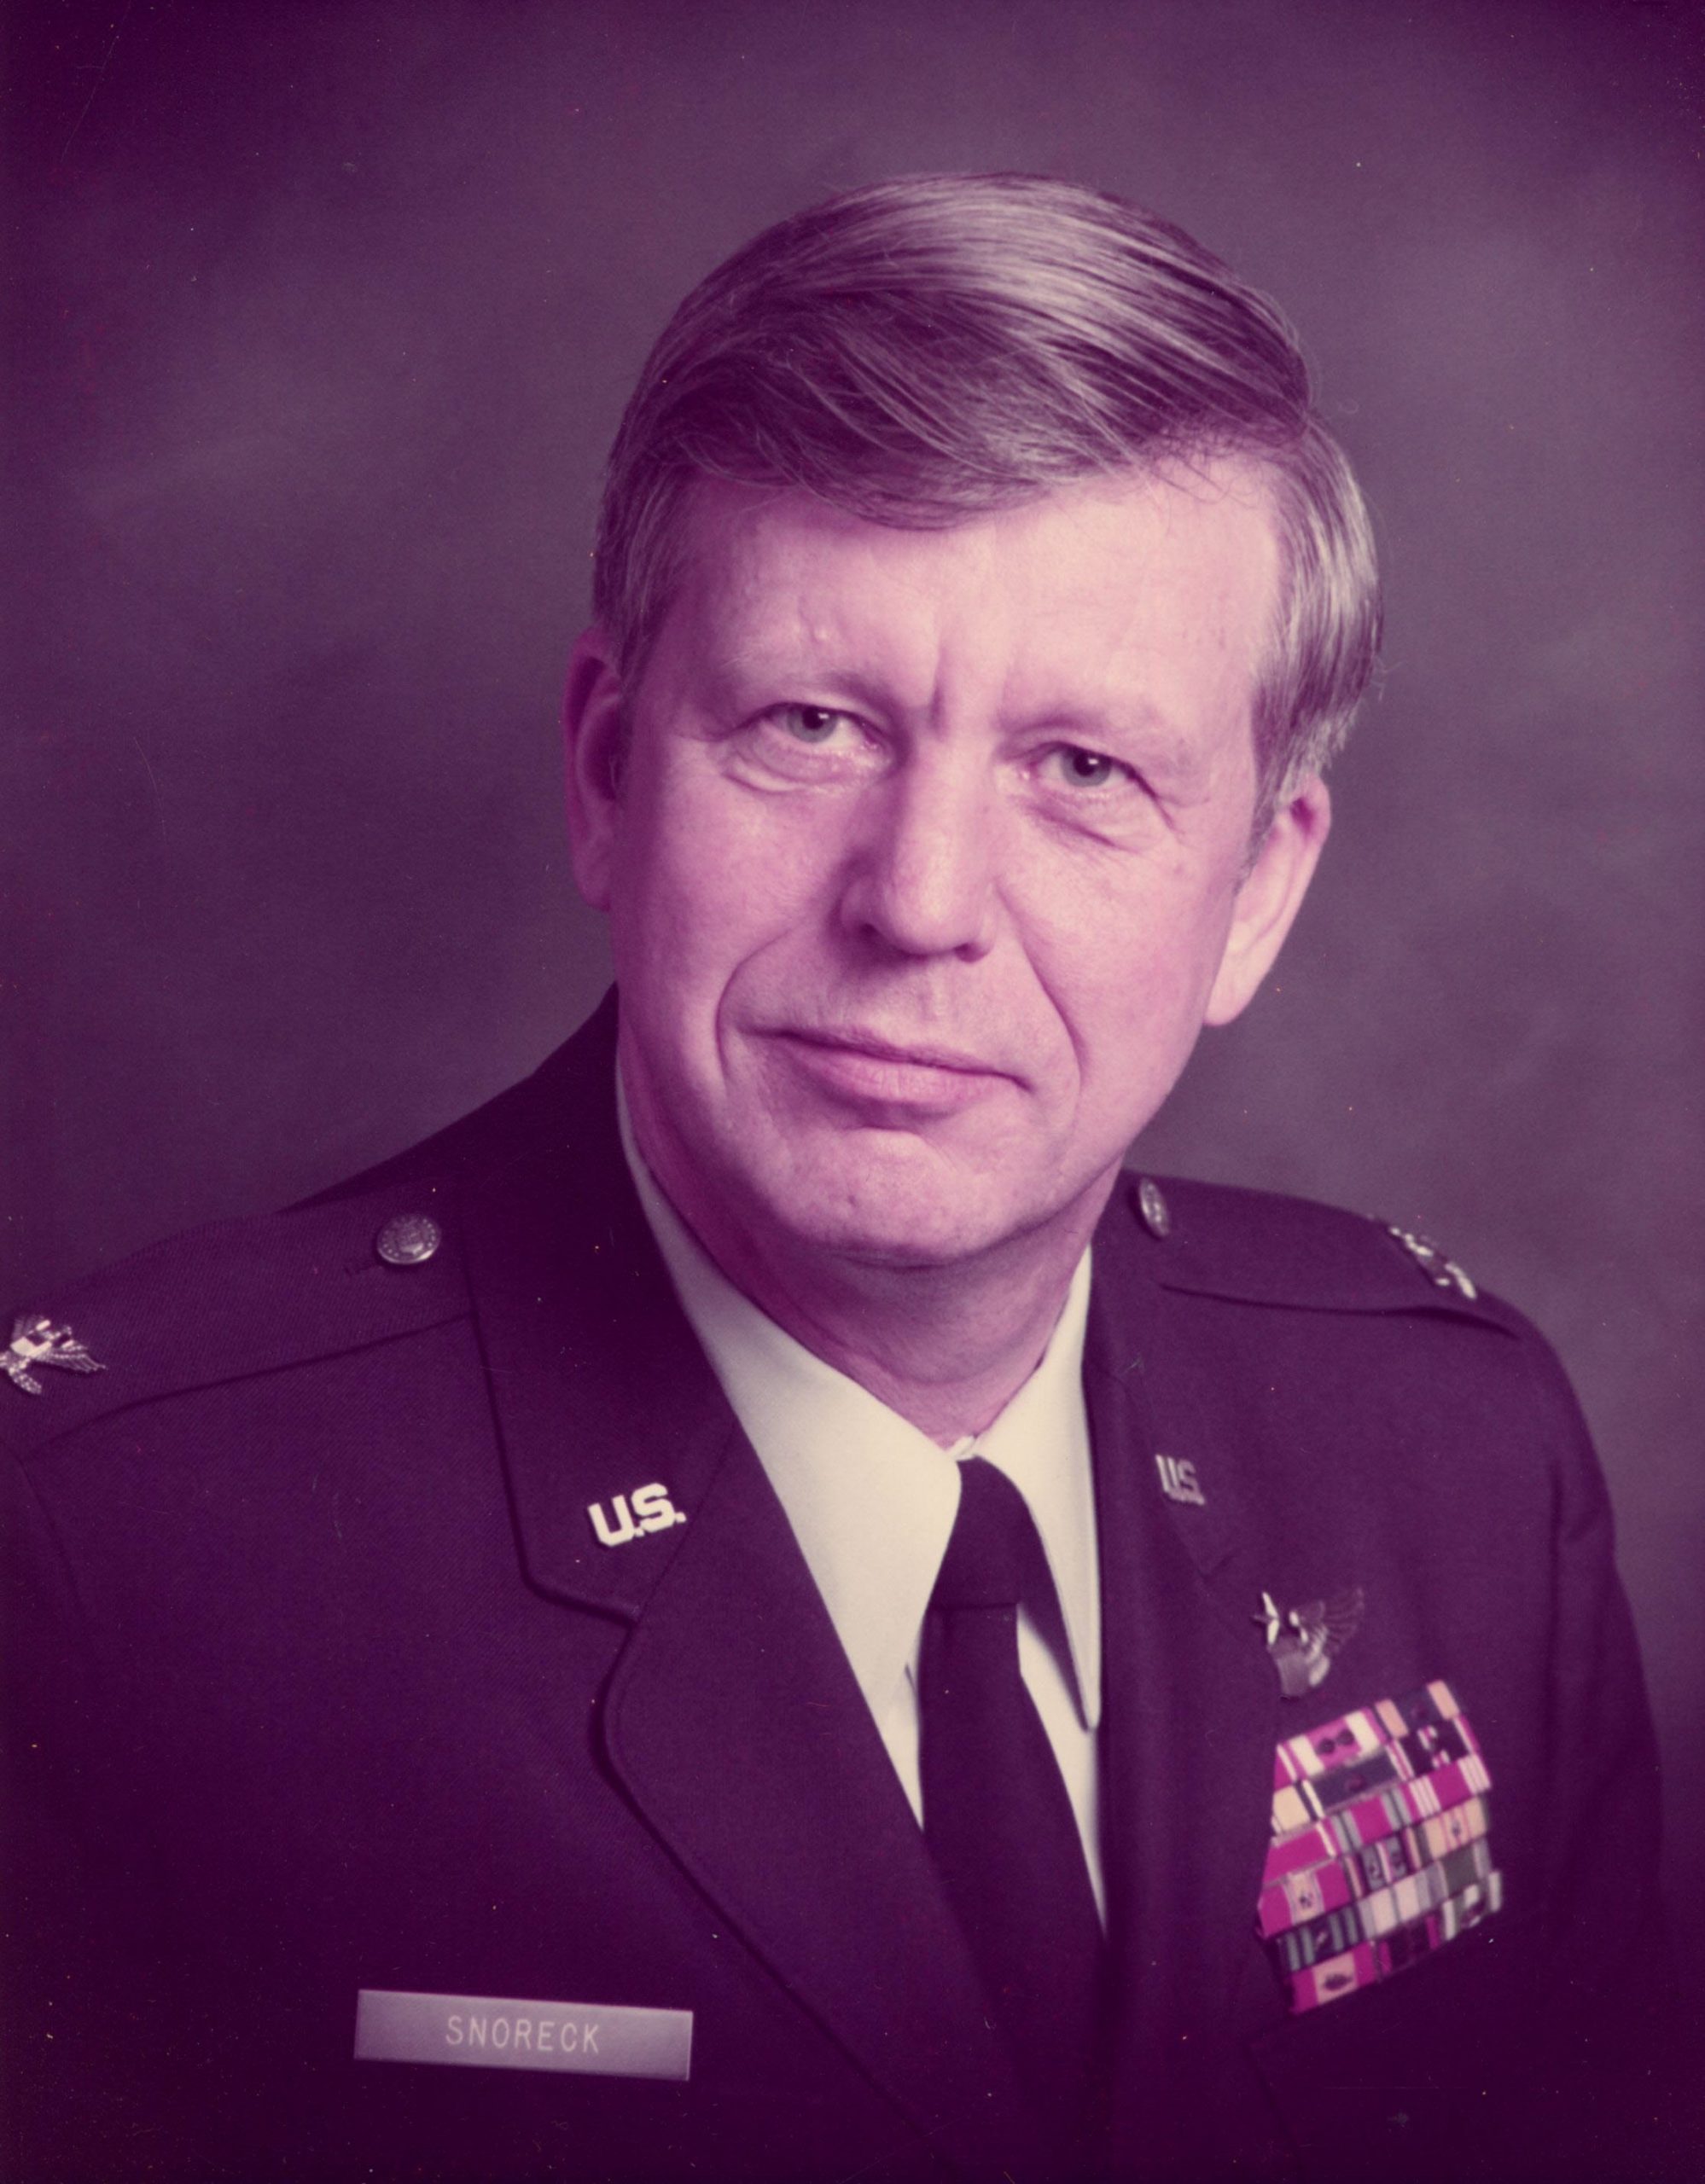 Colonel Harry Philip Snoreck photo